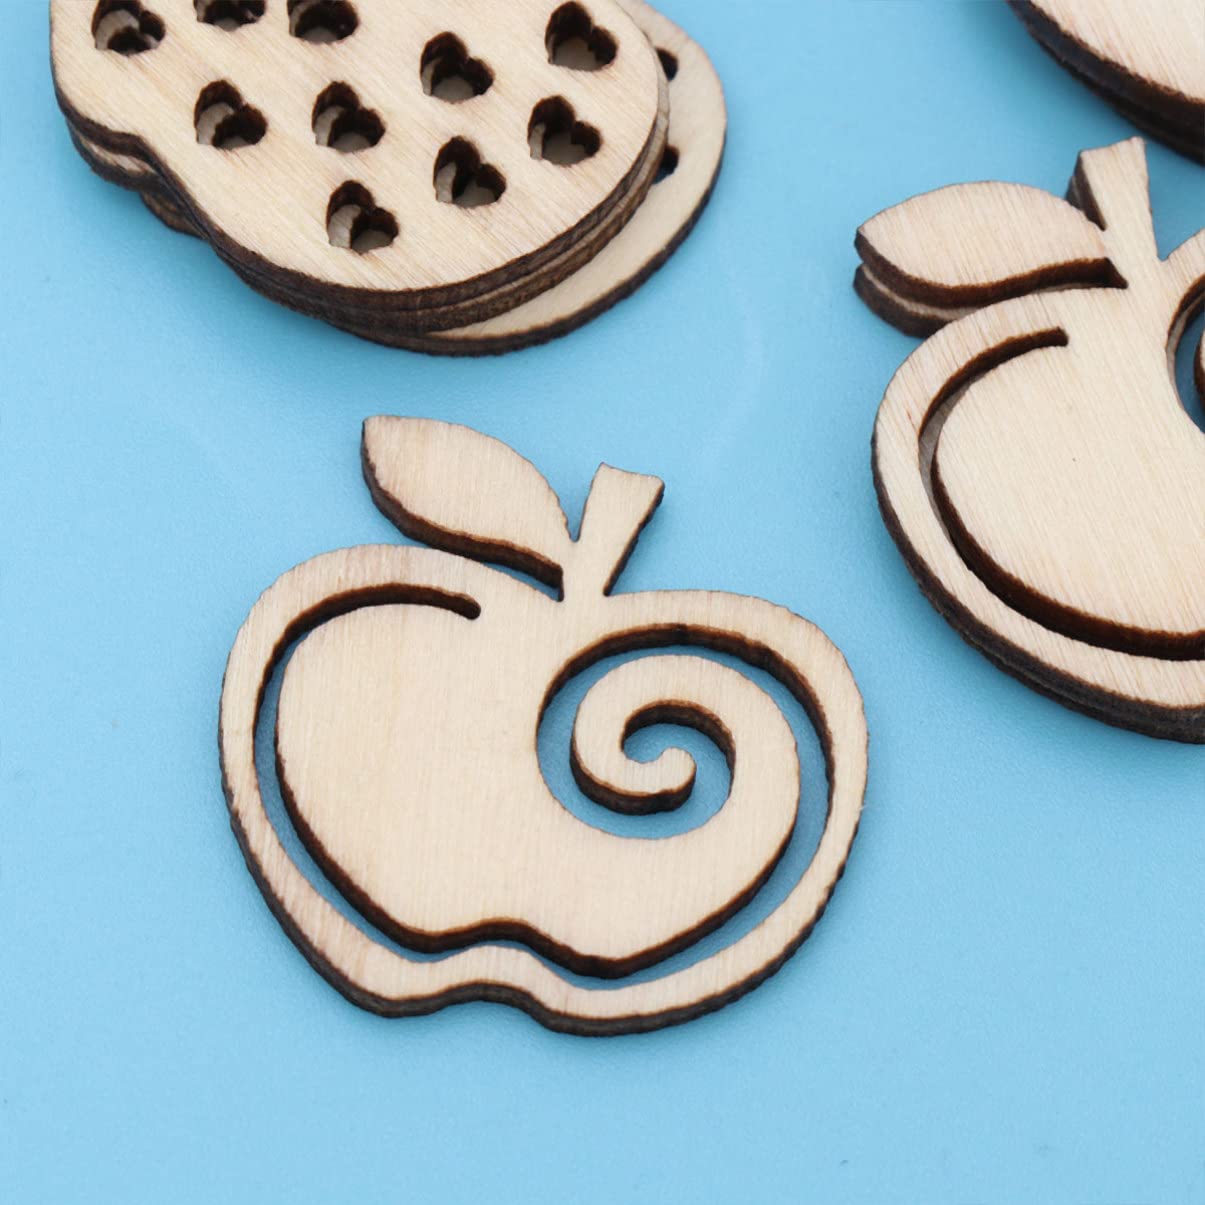 Amosfun 100pcs Wooden Apple Cutout Unfinished Mini Wood Apple Pieces Slice Centerpiece Embellishment for Xmas Wedding Birthday Table Decor DIY Craft